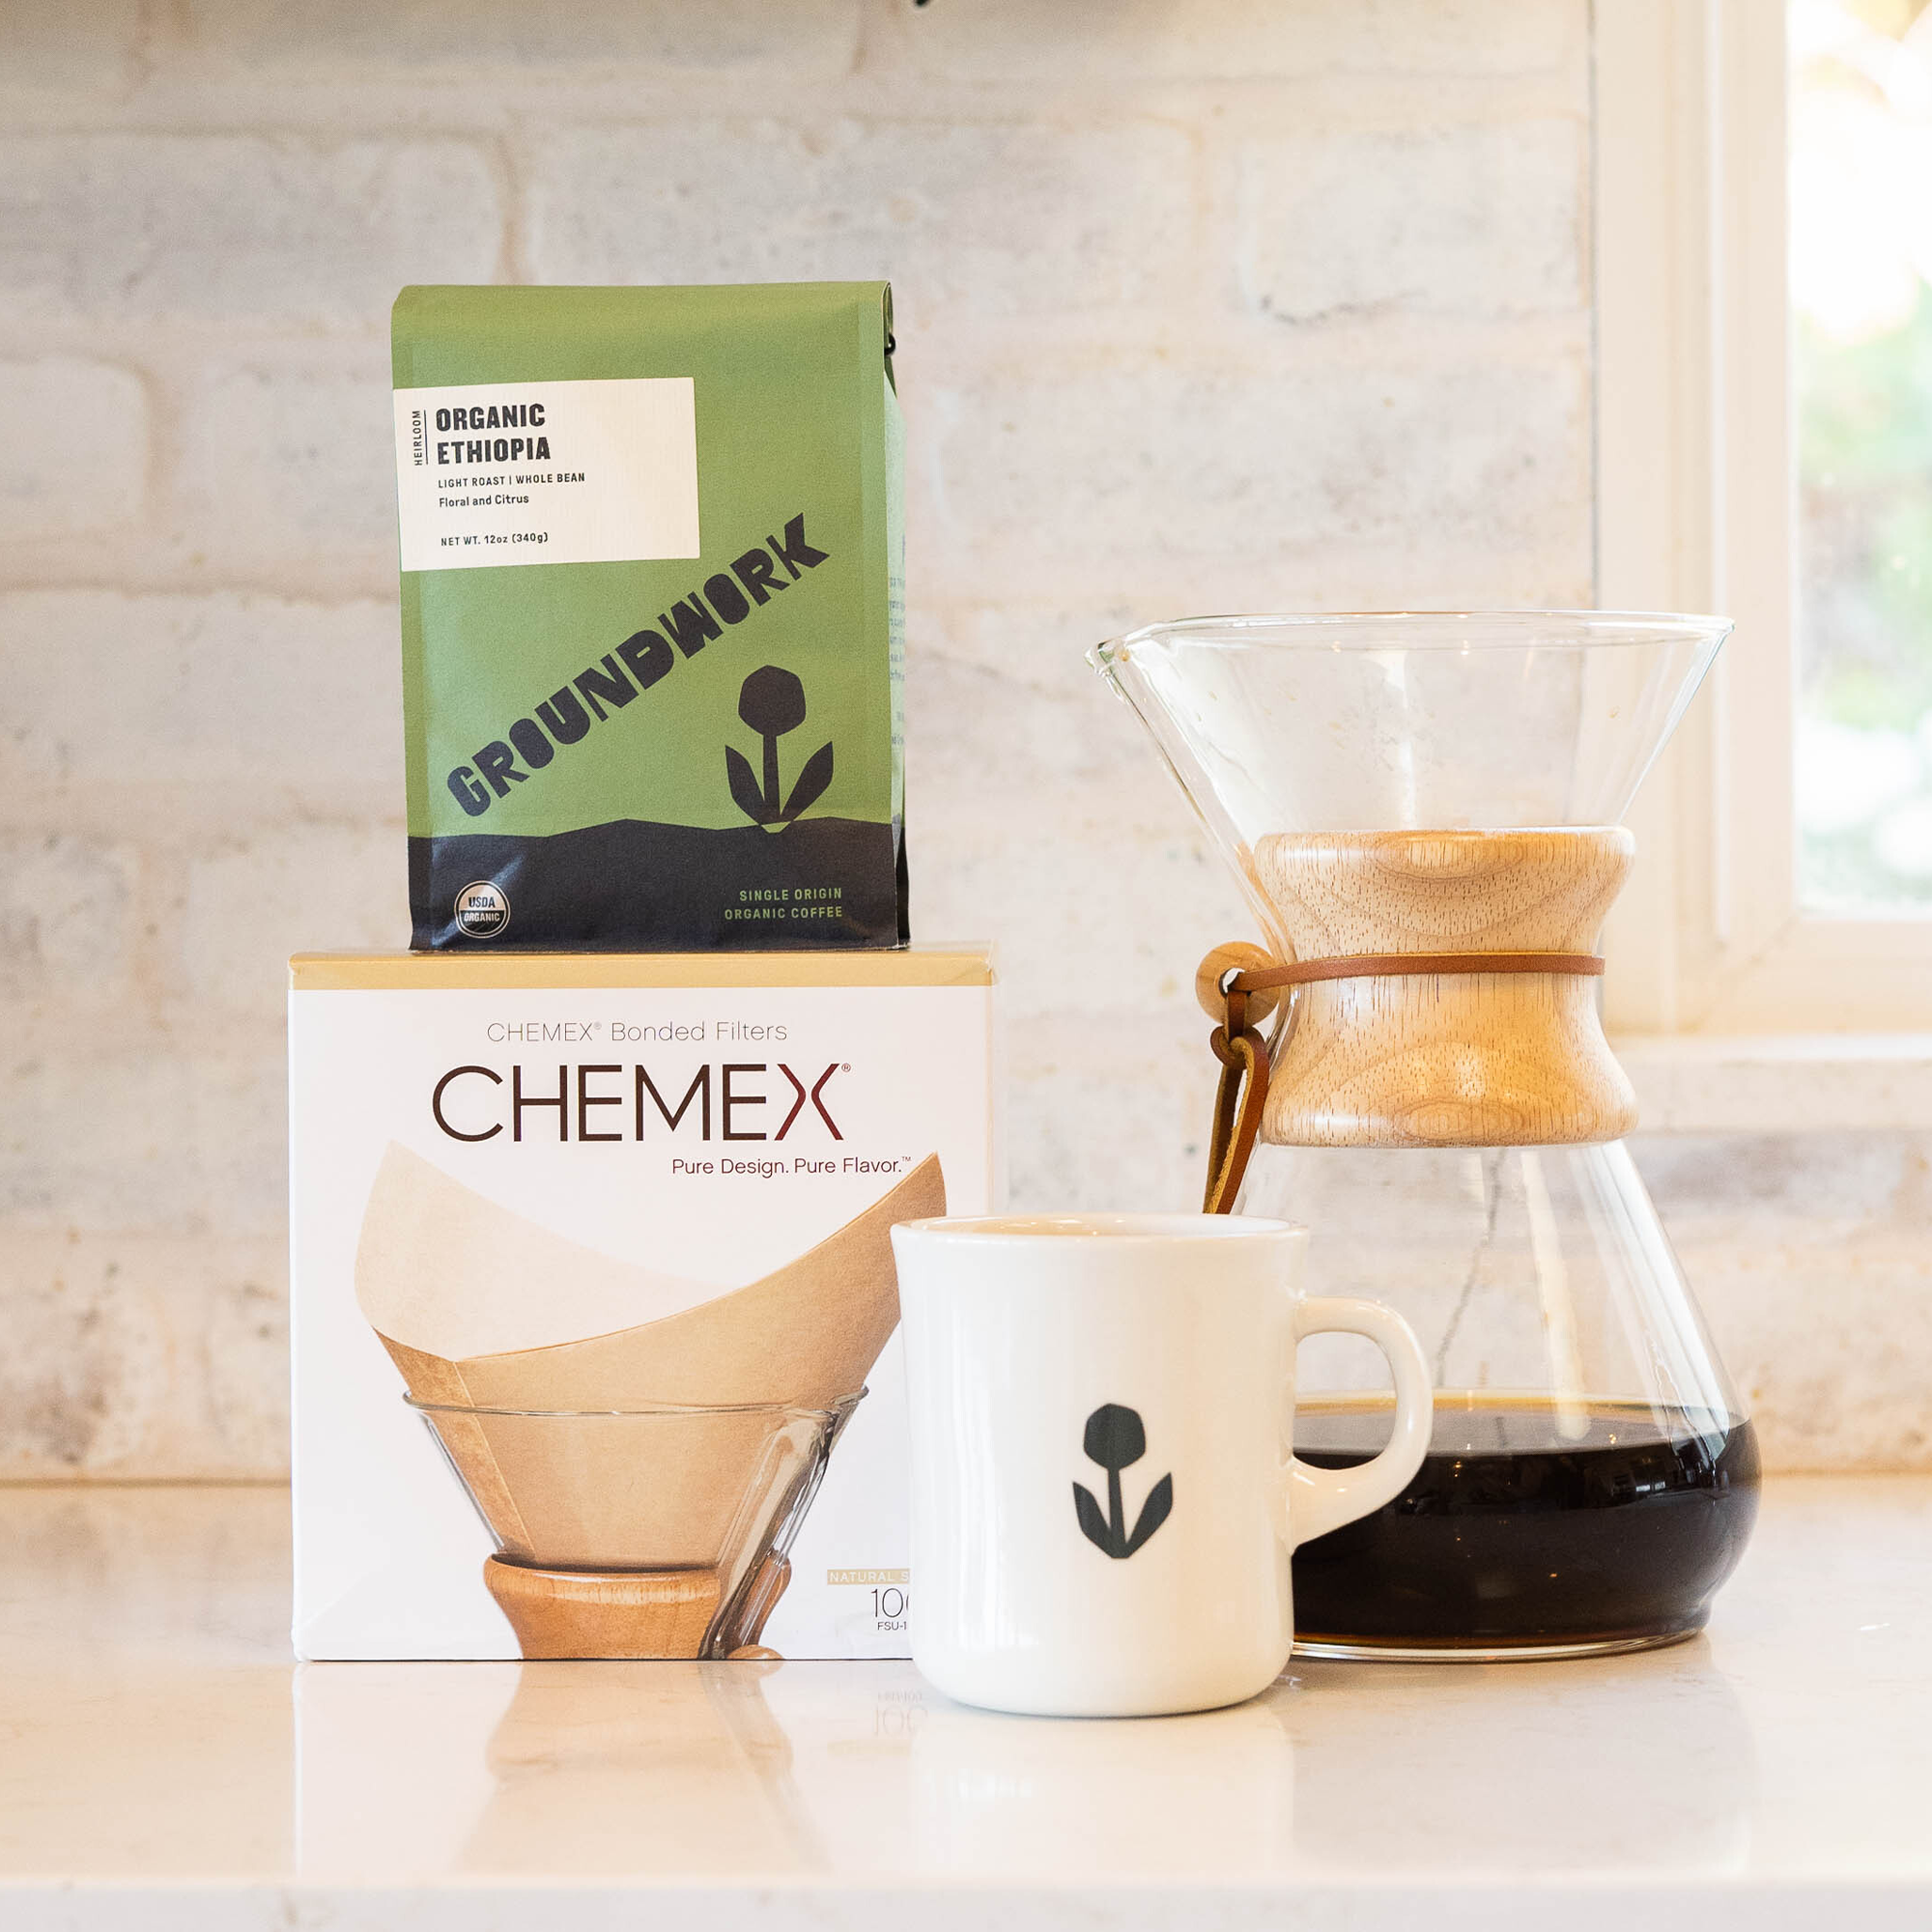 6 Cup Chemex Coffee Maker